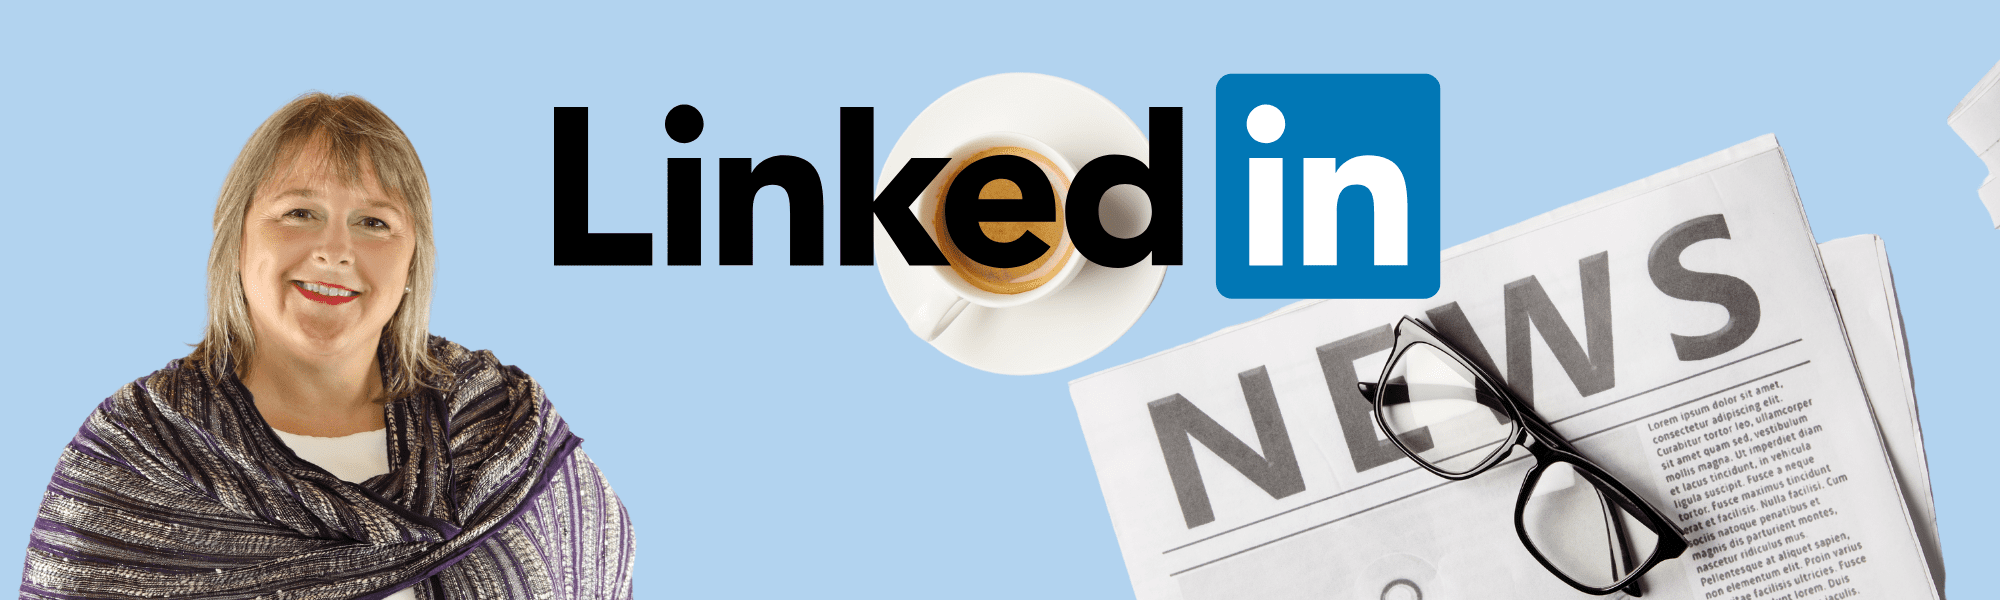 LinkedIn News (LinkedIn Article Cover)